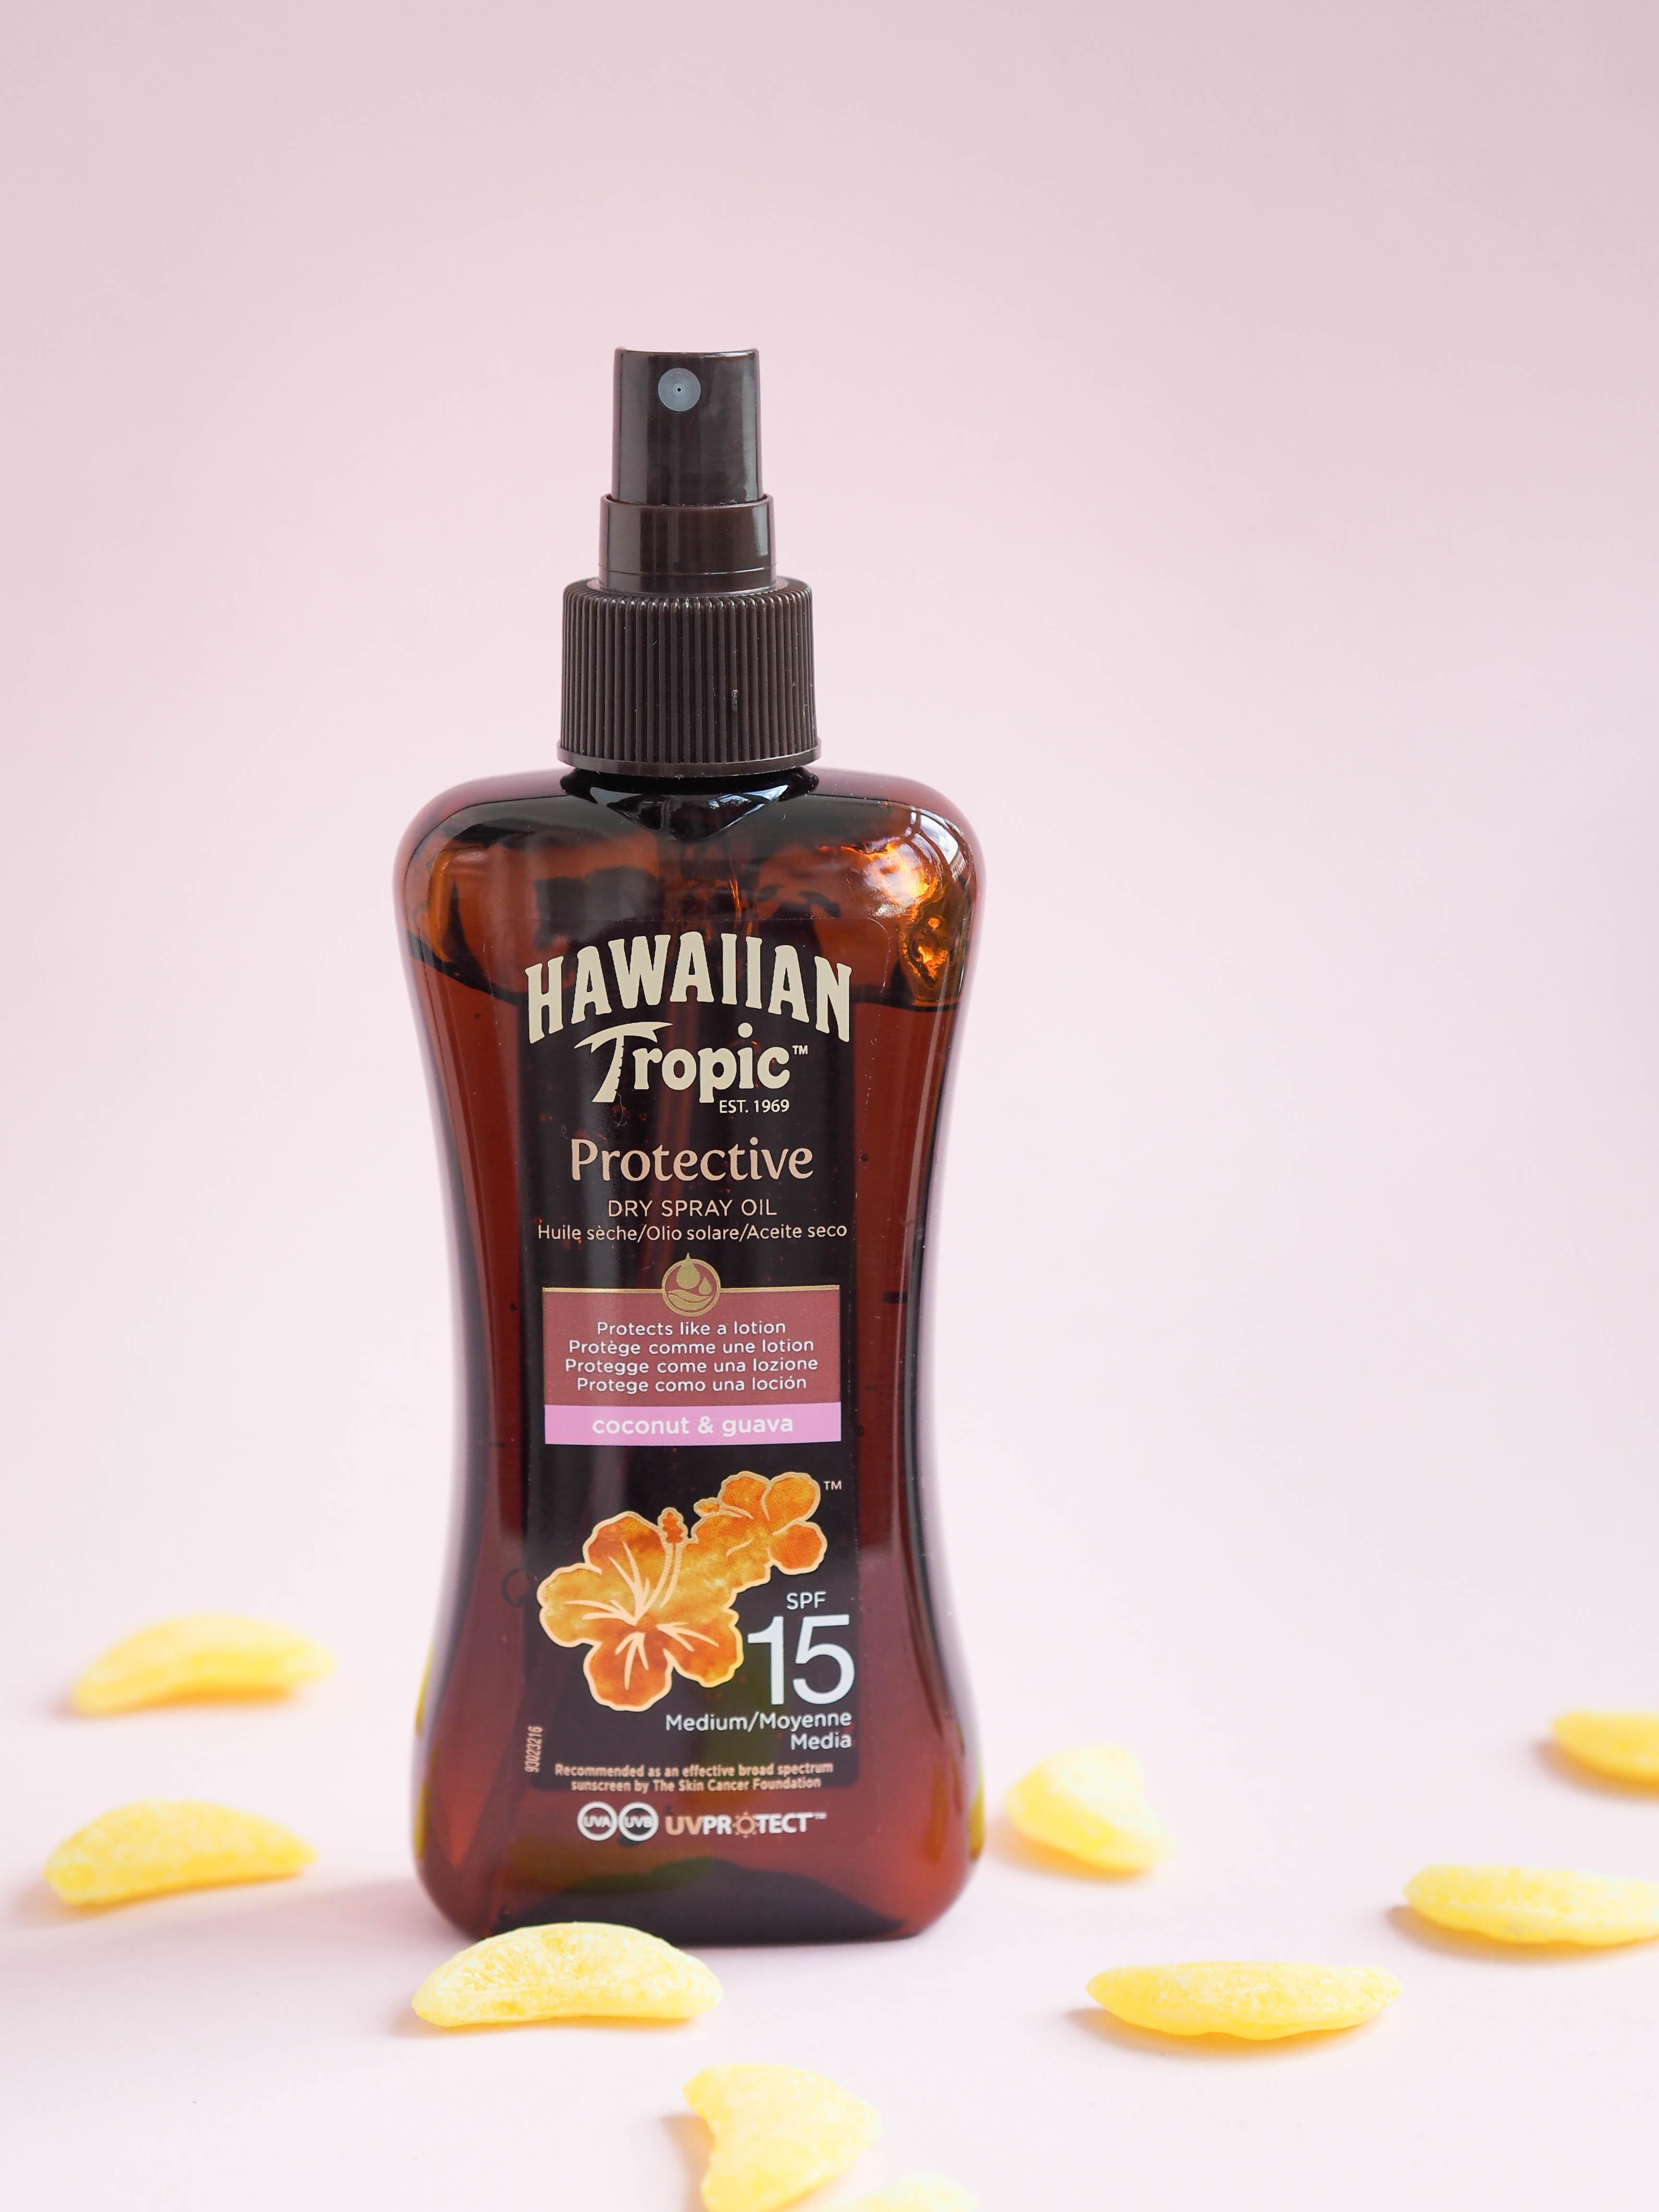 Aloha: Im Herbst schützen wir unsere Haut mit dem Dry Spray Oil von Hawaiian Tropic #beautylieblinge #hawaiiantropic
